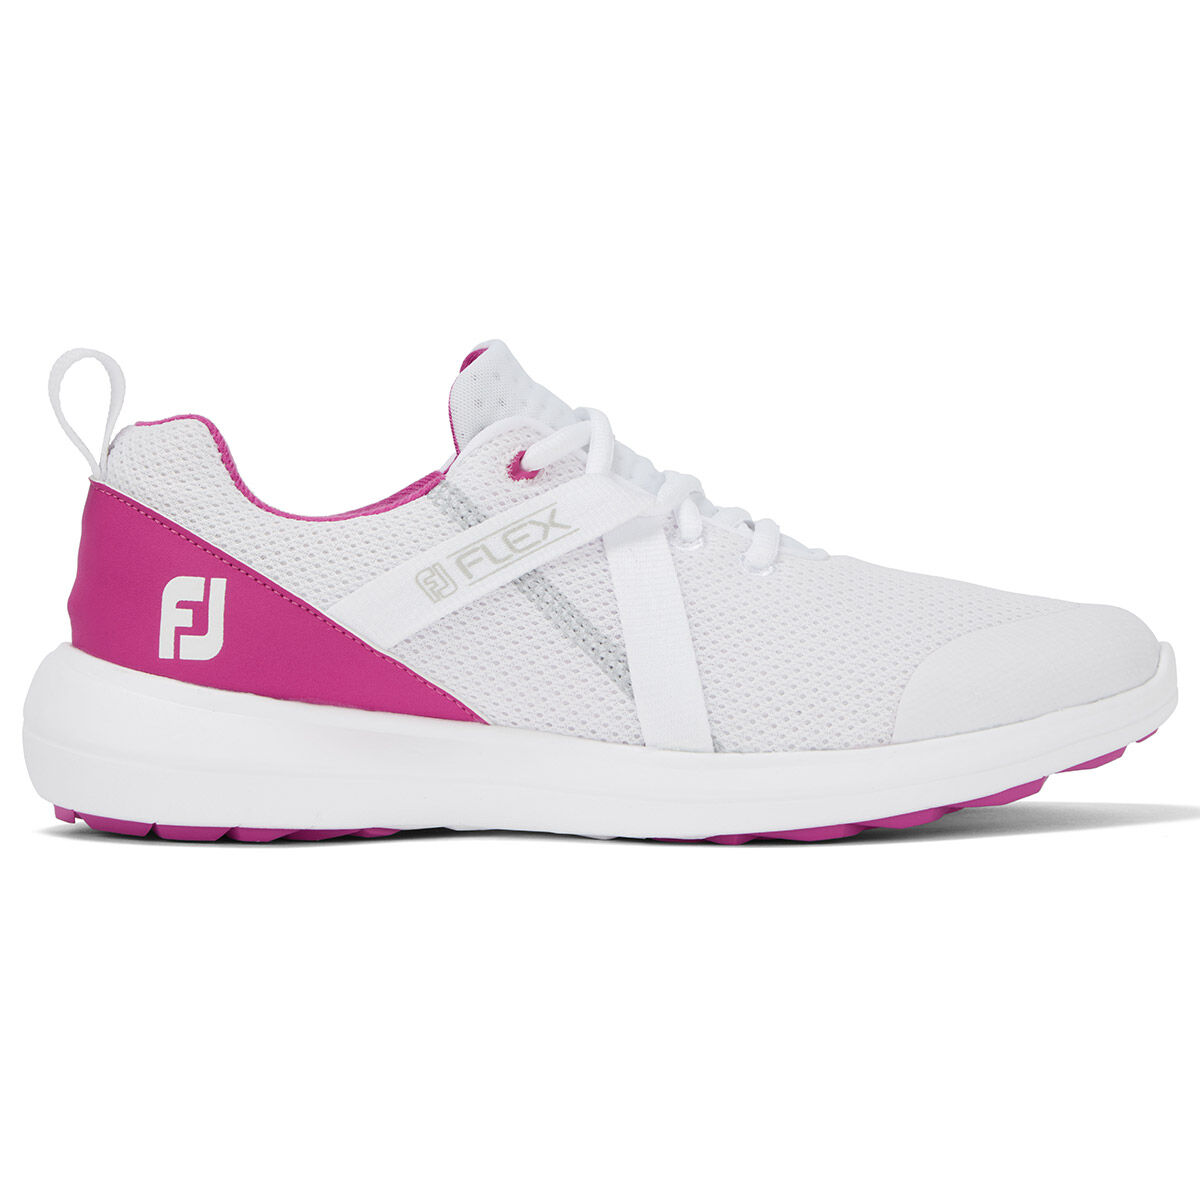 Chaussures FootJoy Flex pour femmes, femme, 4, Blanc/Rose, Normal | Online Golf